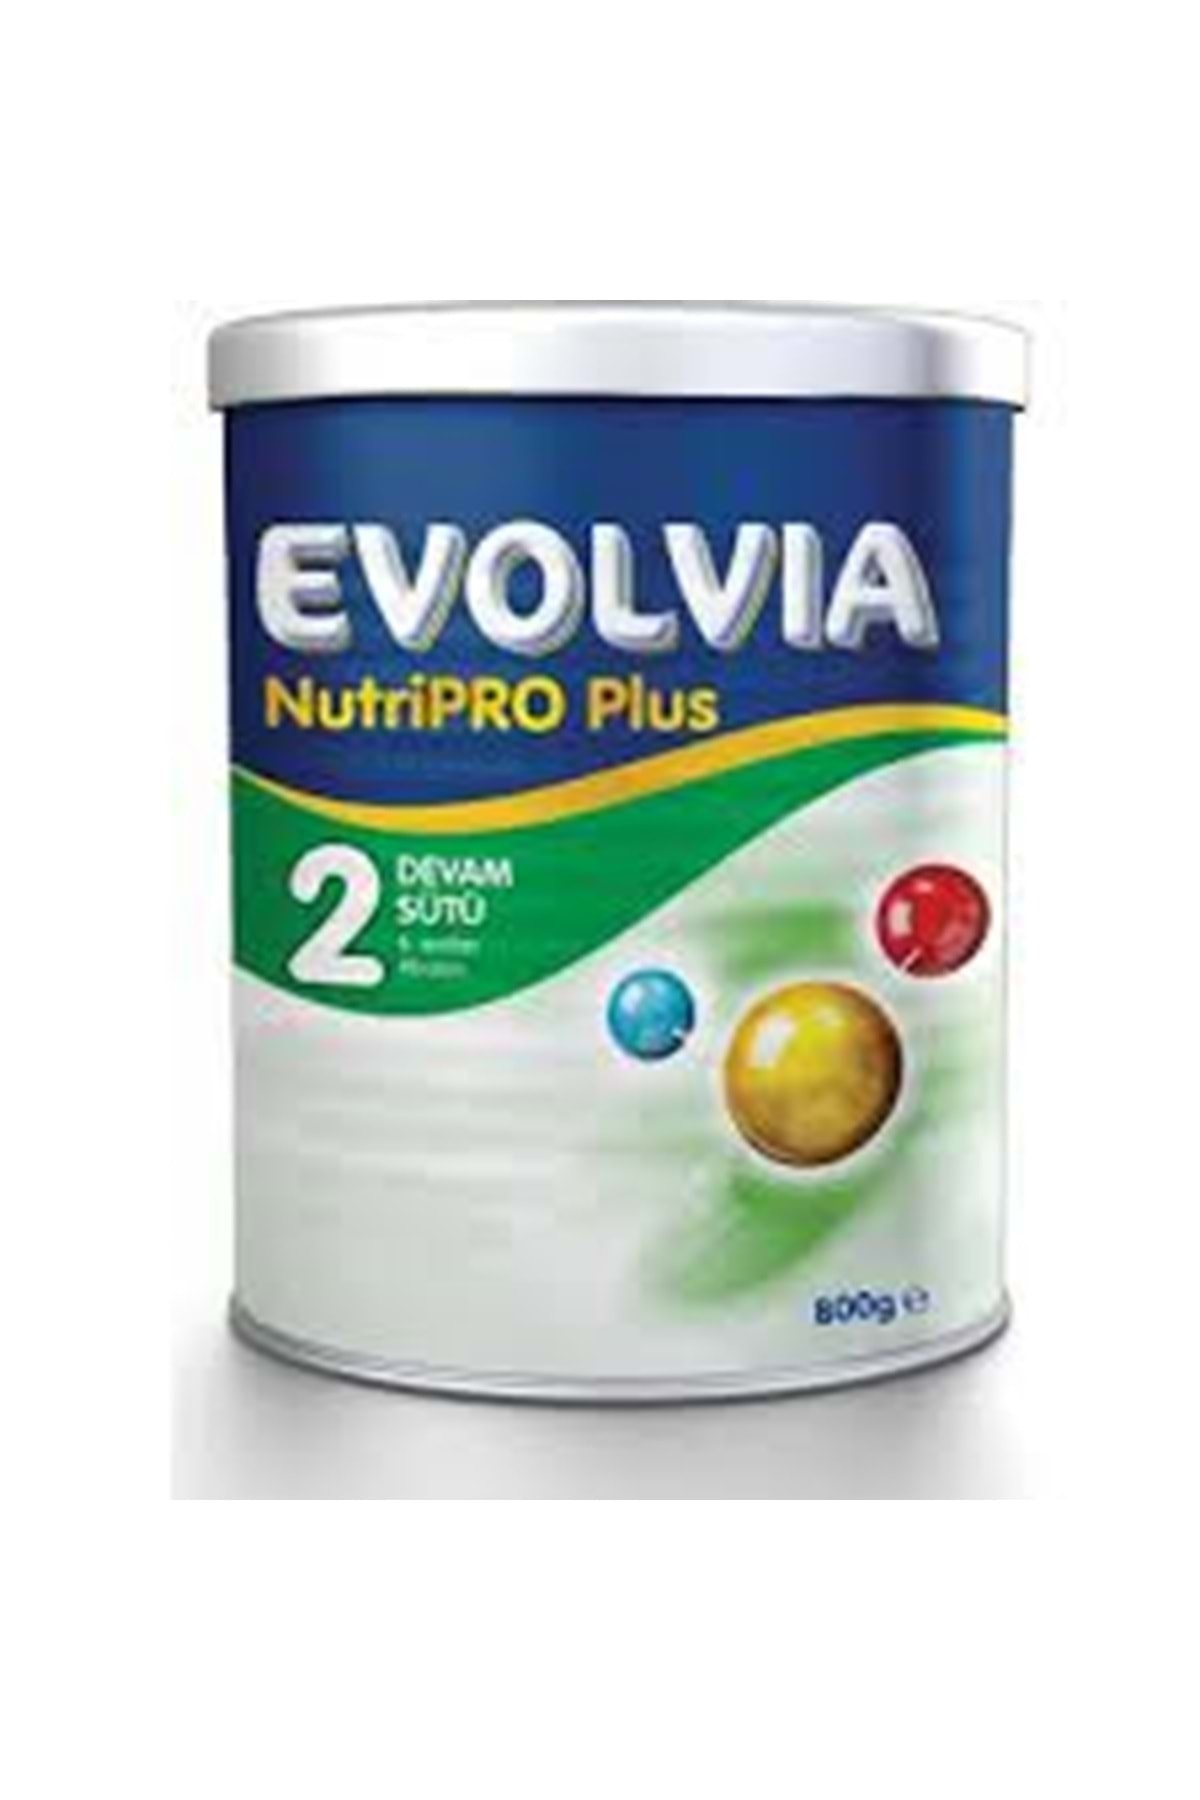 Evolvia Nutripro Plus 2 Devam Sütü 800 gr